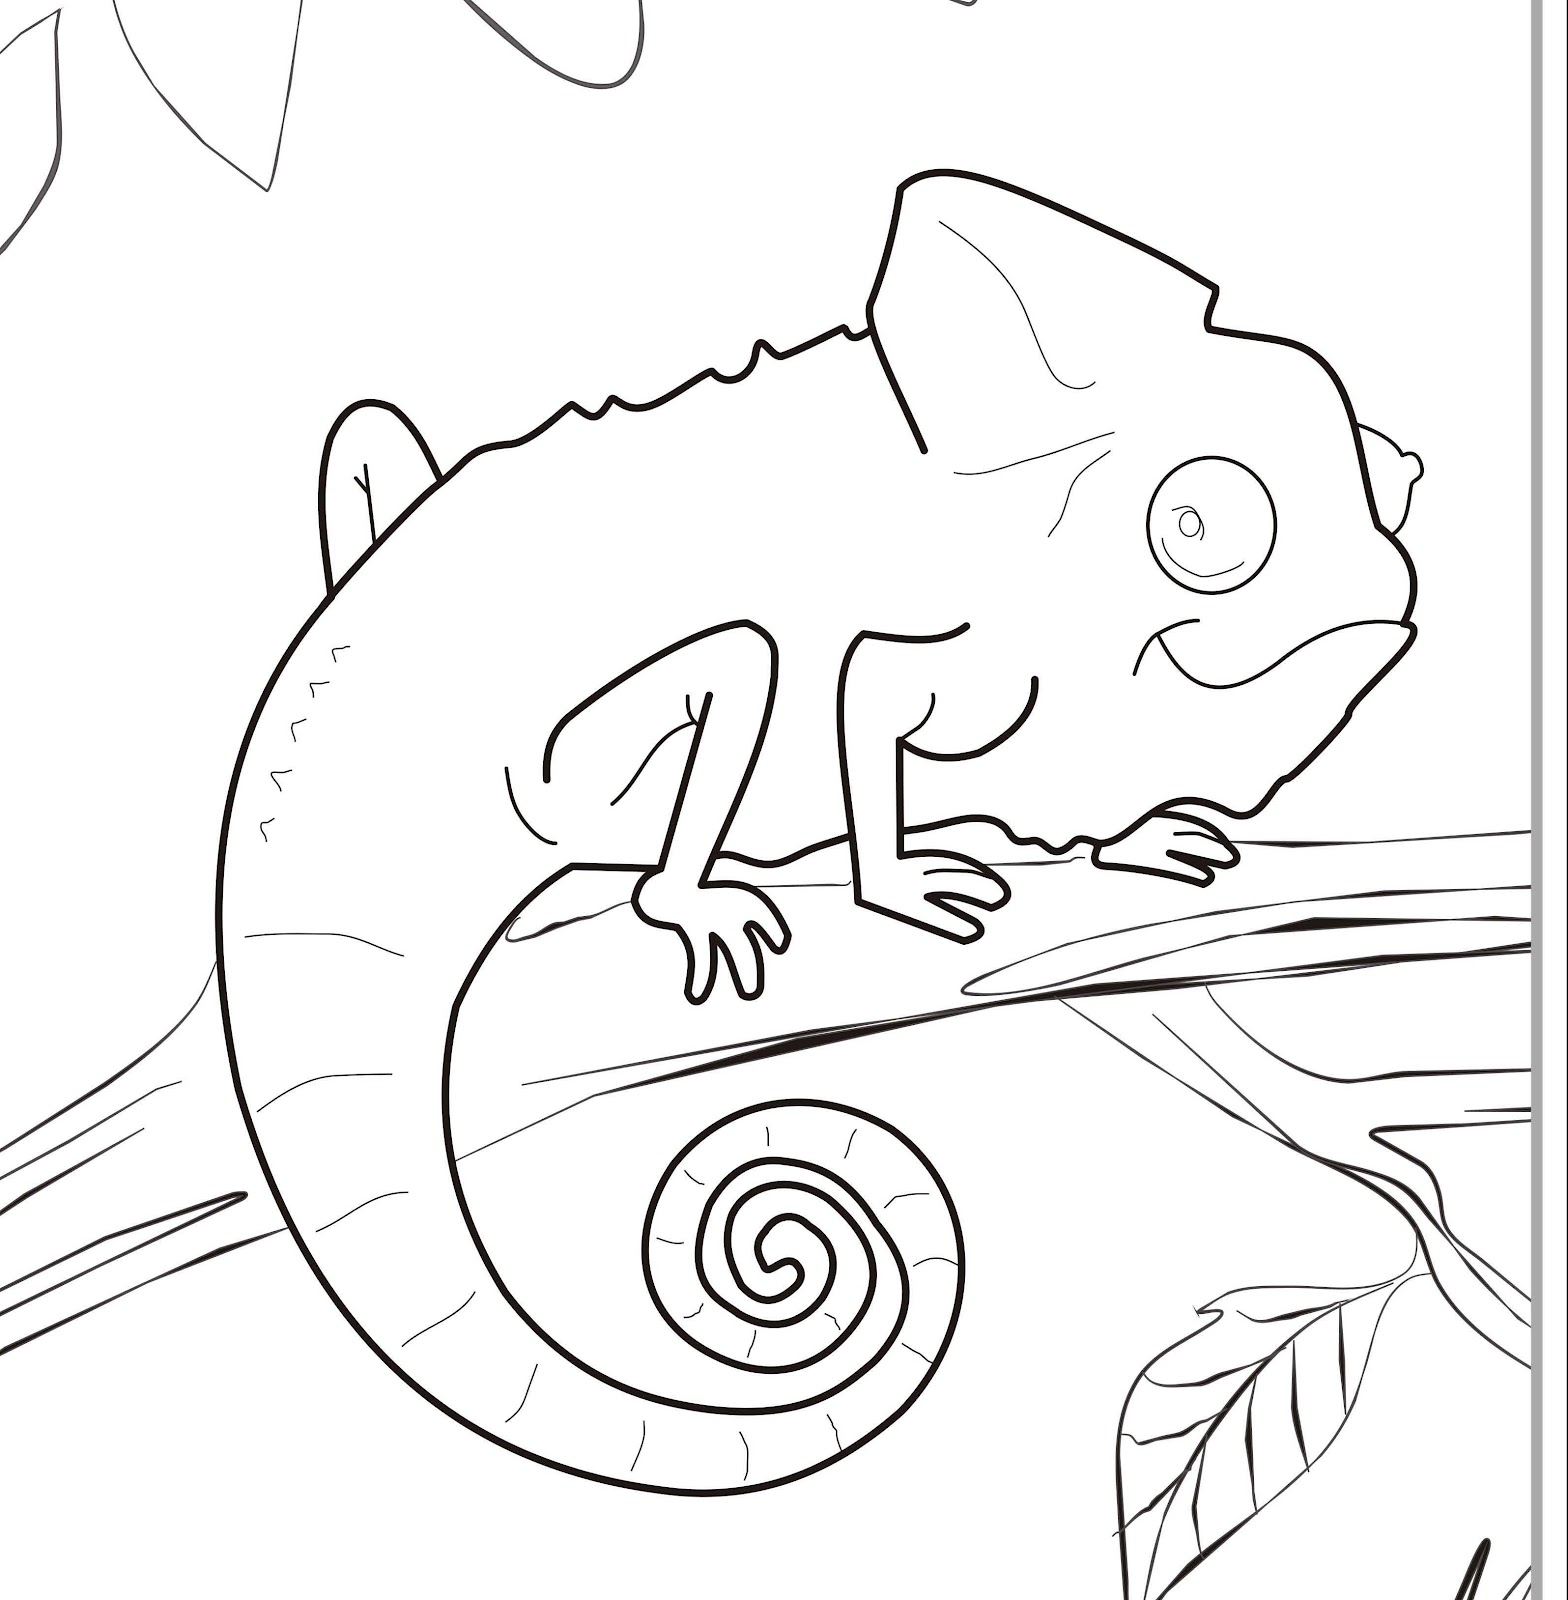 Chameleon Coloring Pages - Kidsuki